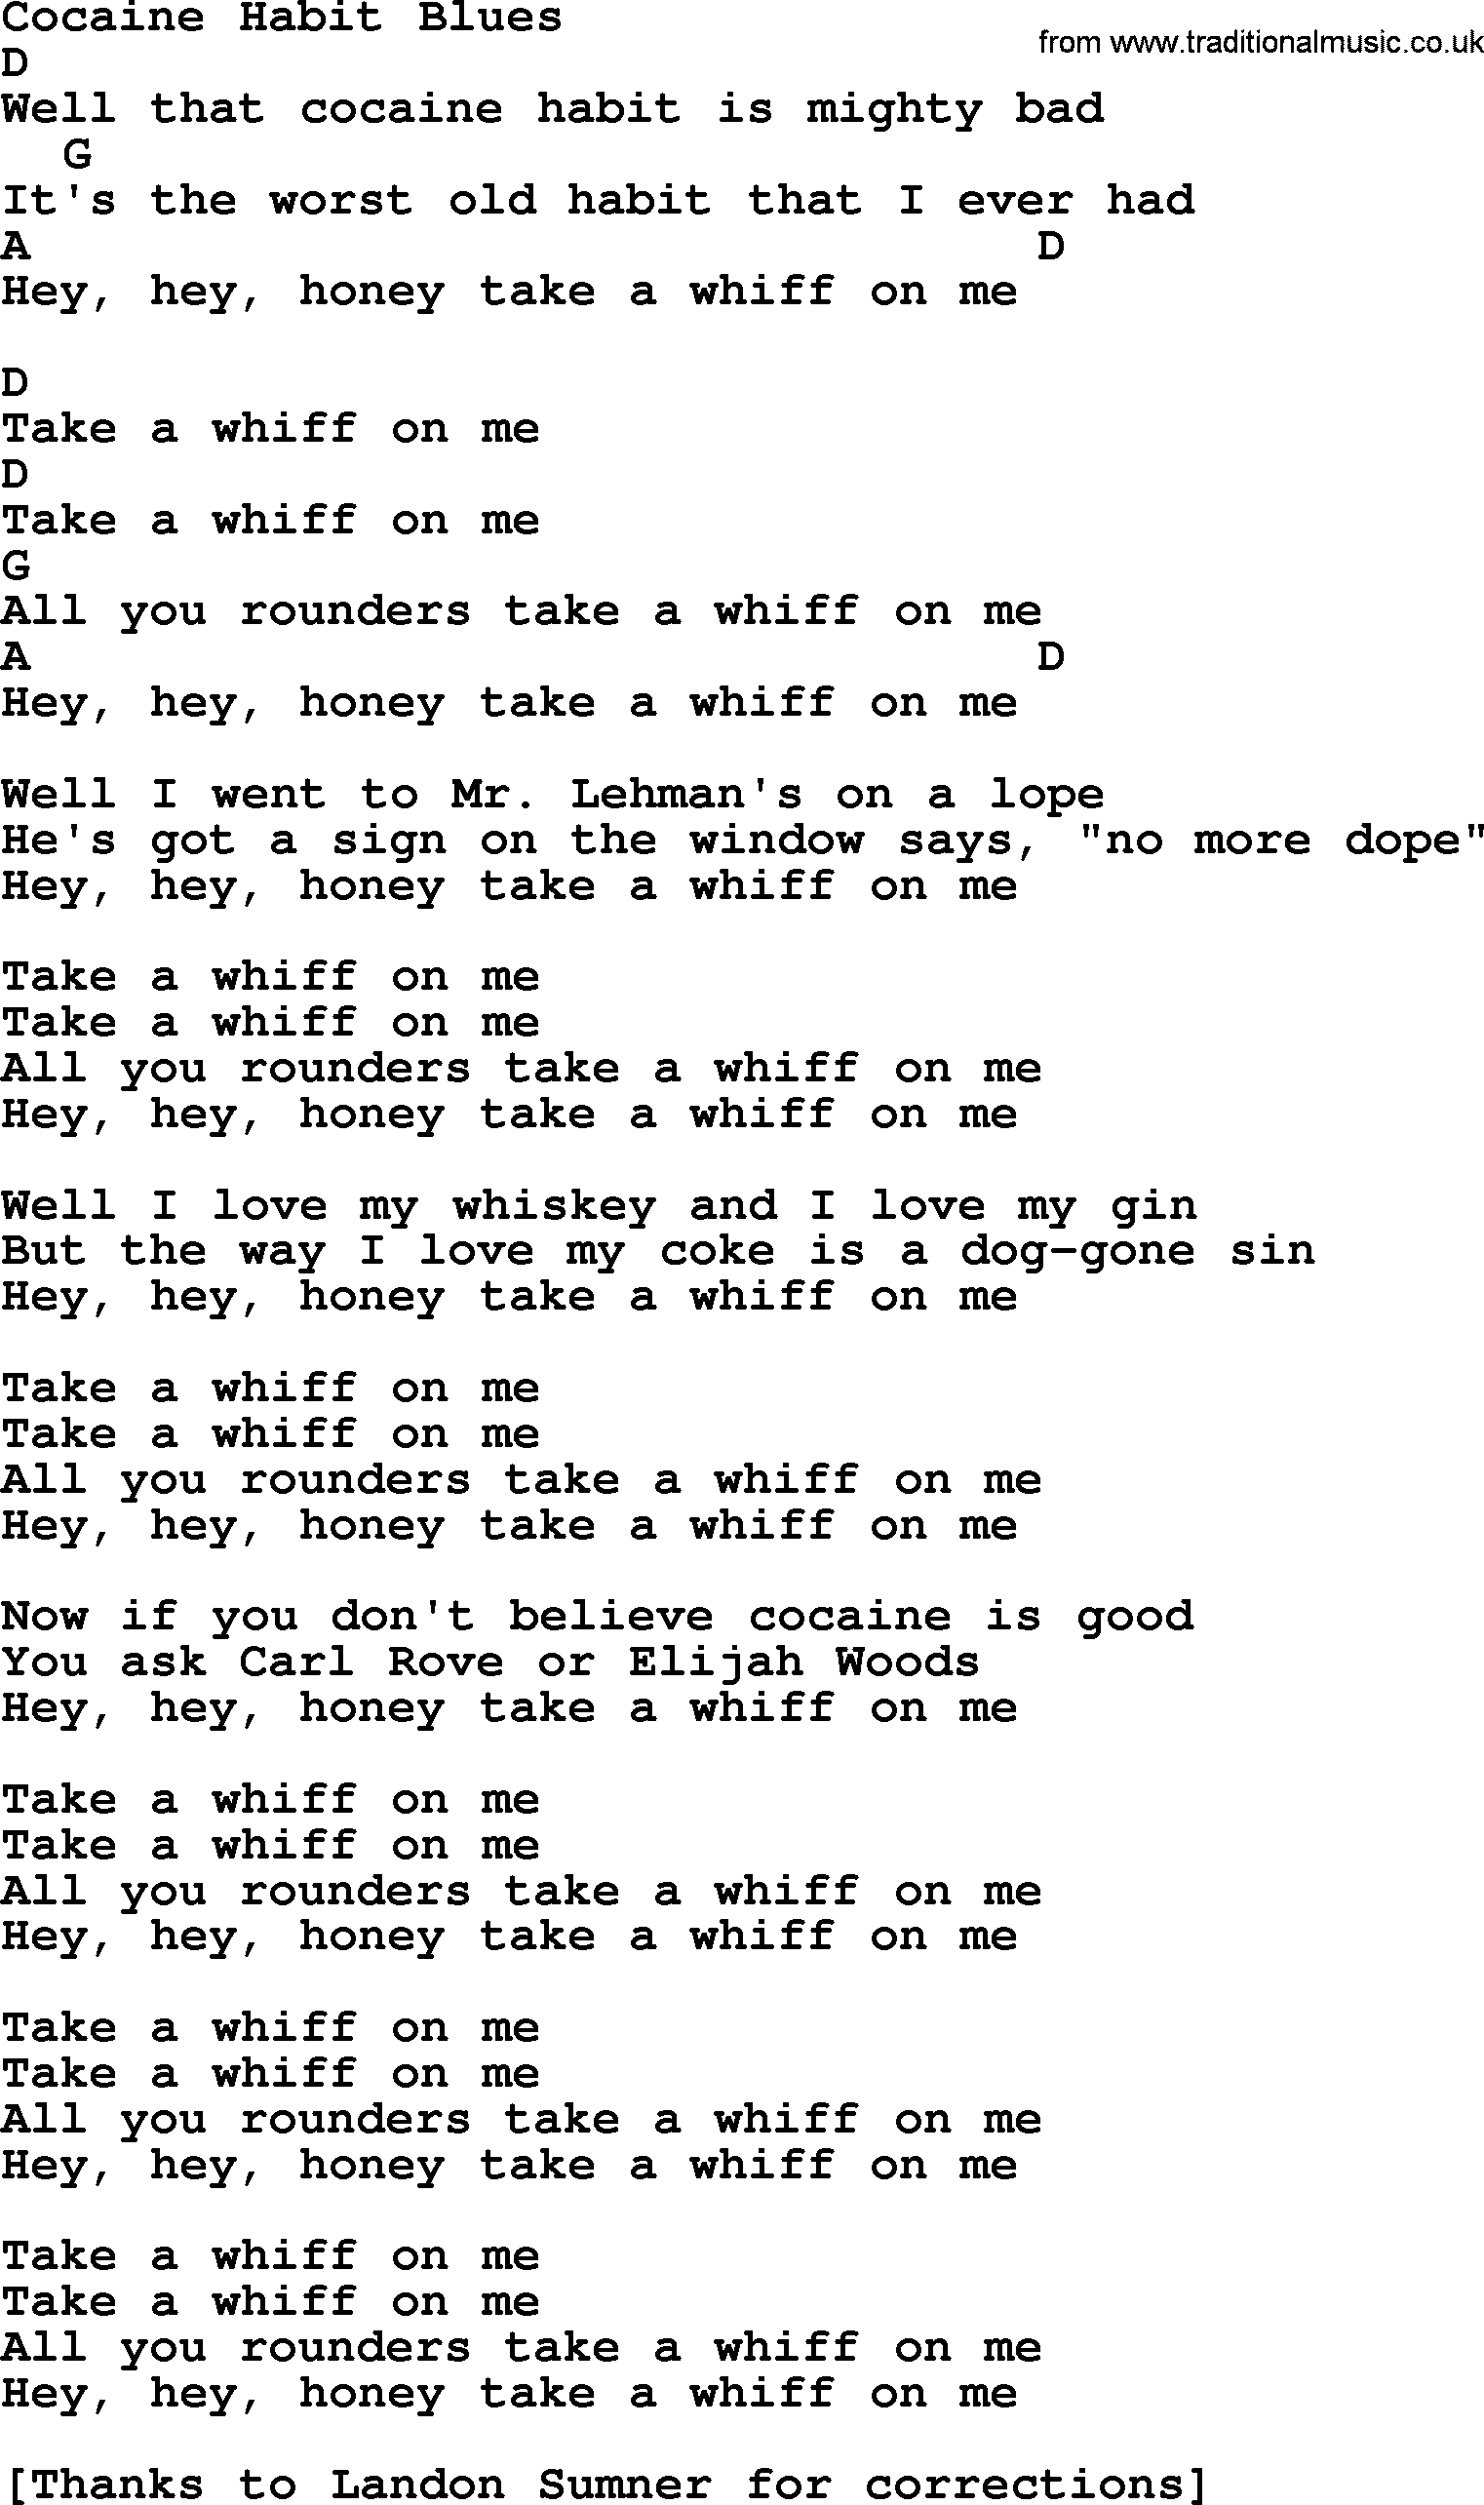 Bluegrass song: Cocaine Habit Blues, lyrics and chords